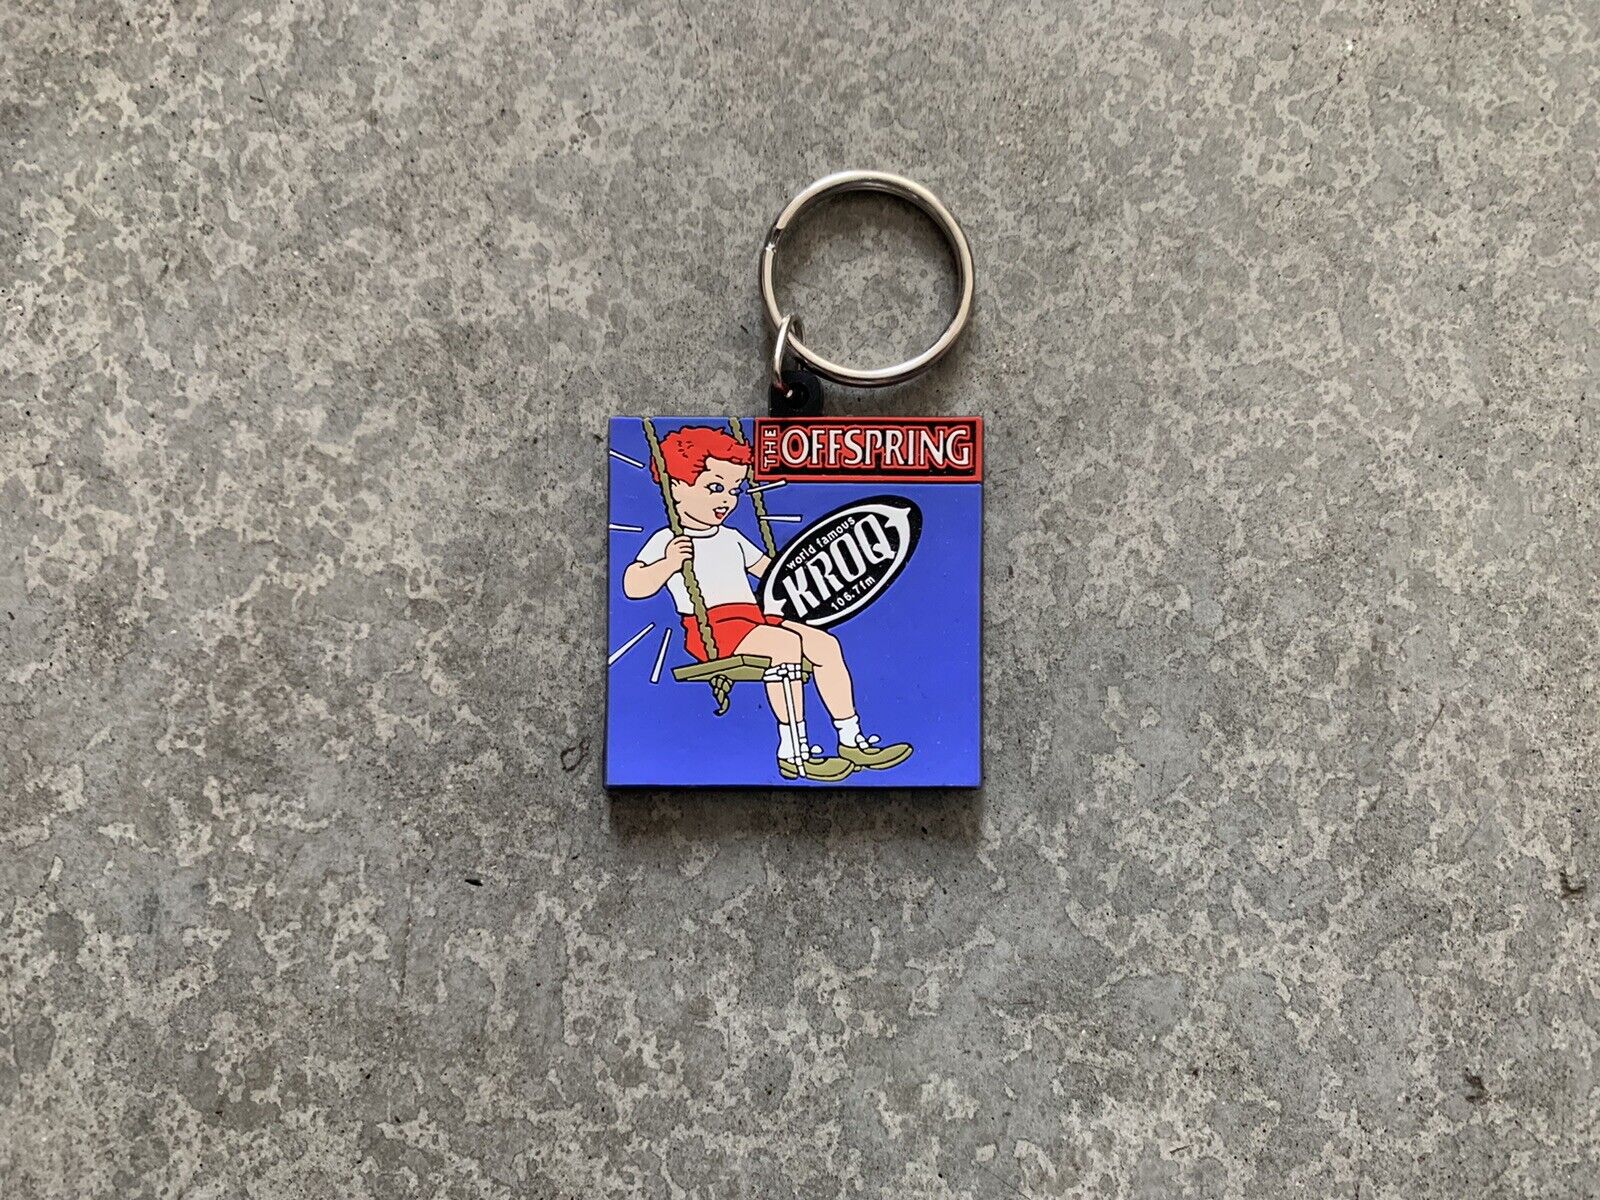 KROQ X The Offspring - Key Chain / Keychain - 1999 - Universal Amphitheatre